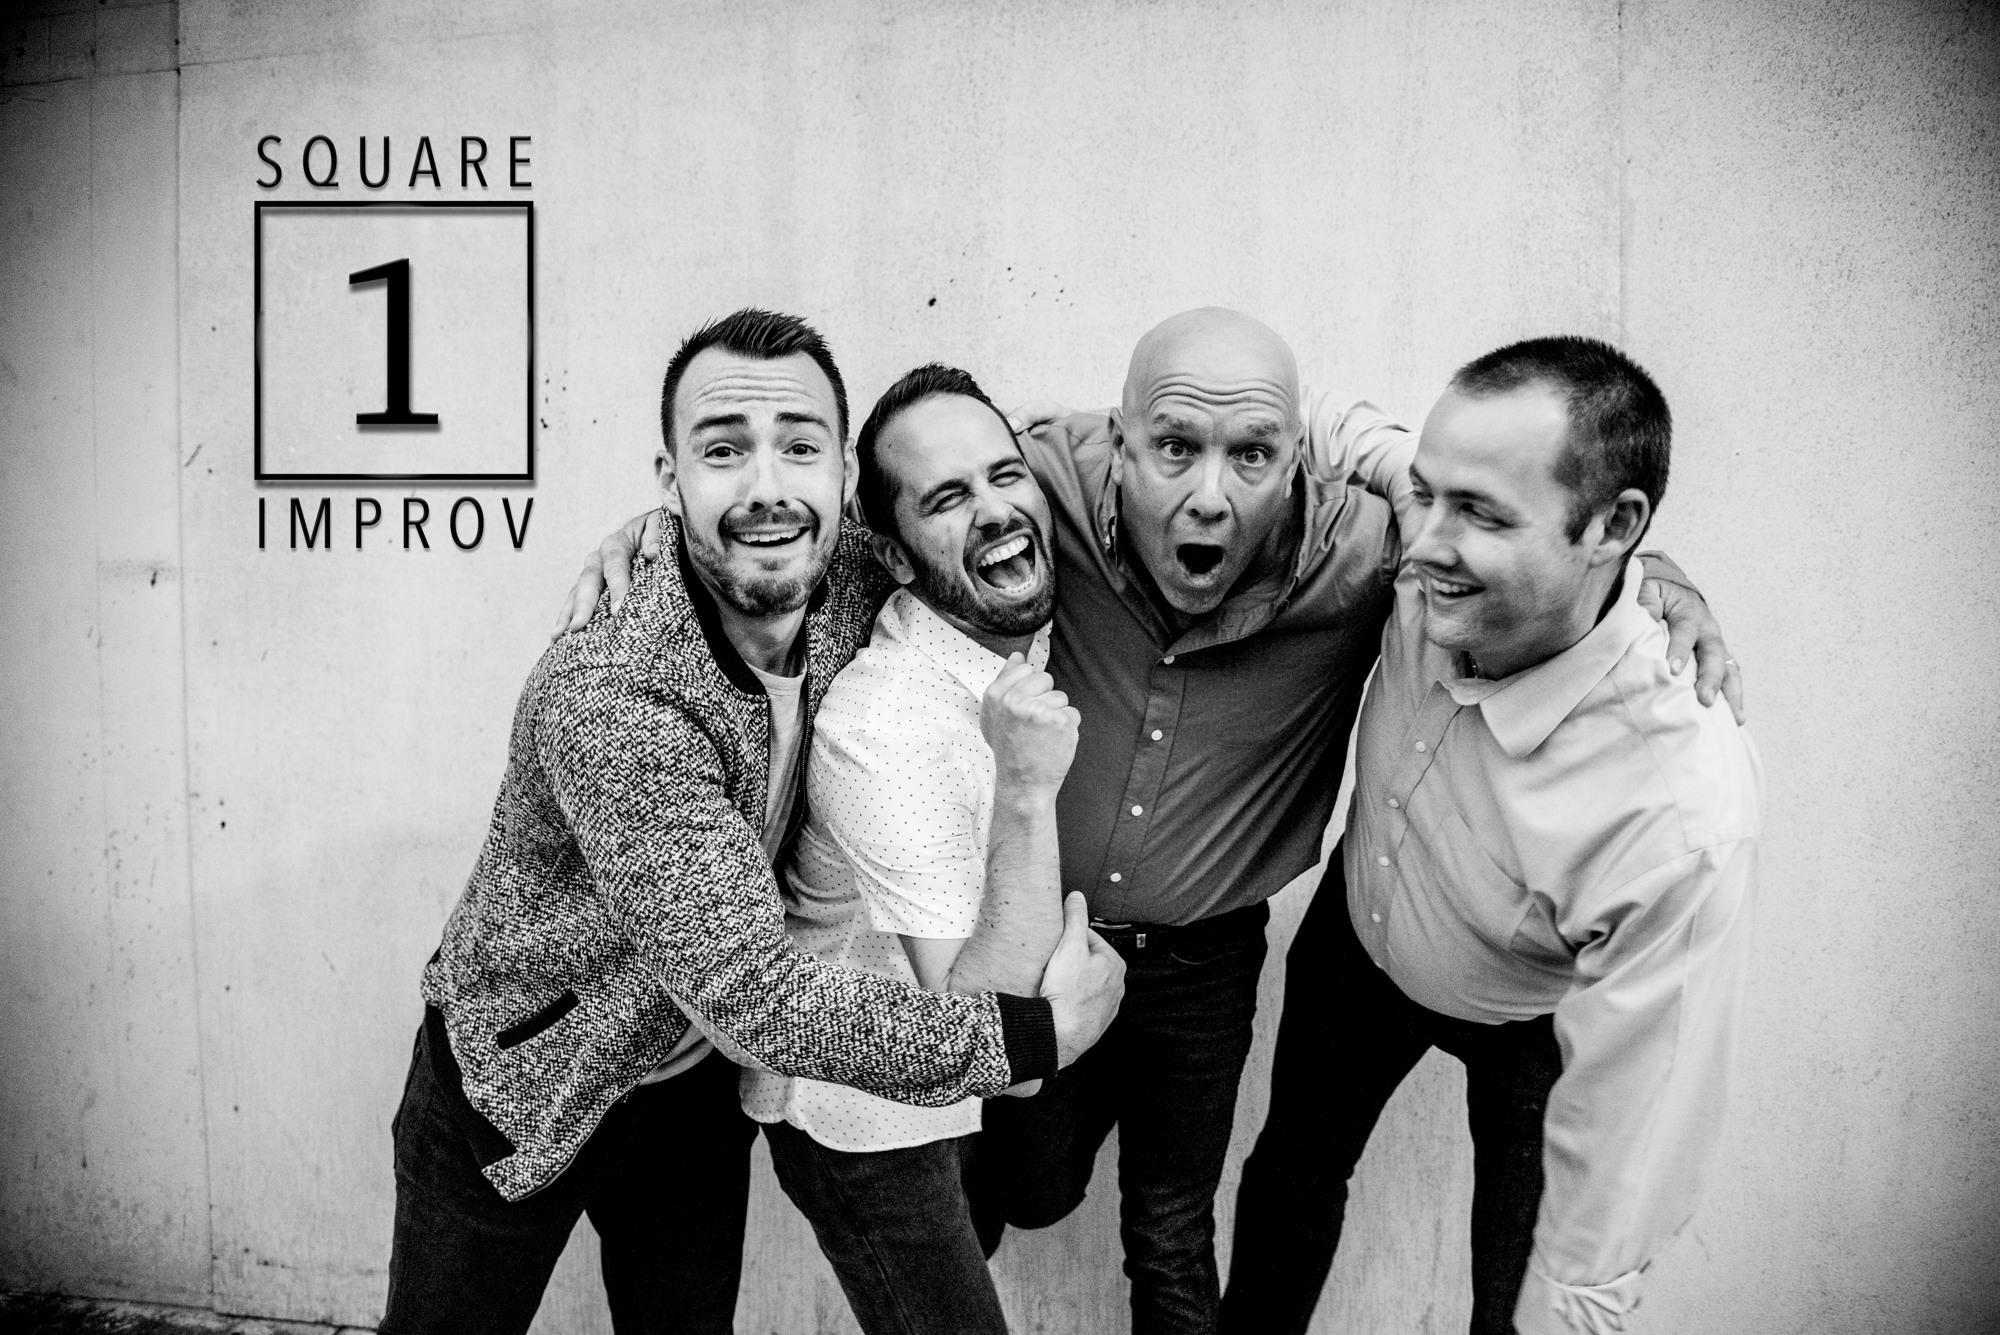 Greg Sofranko, Shaun Johnson, Dan Klein, and Scott Beatty of Square One Improv. Courtesy photo